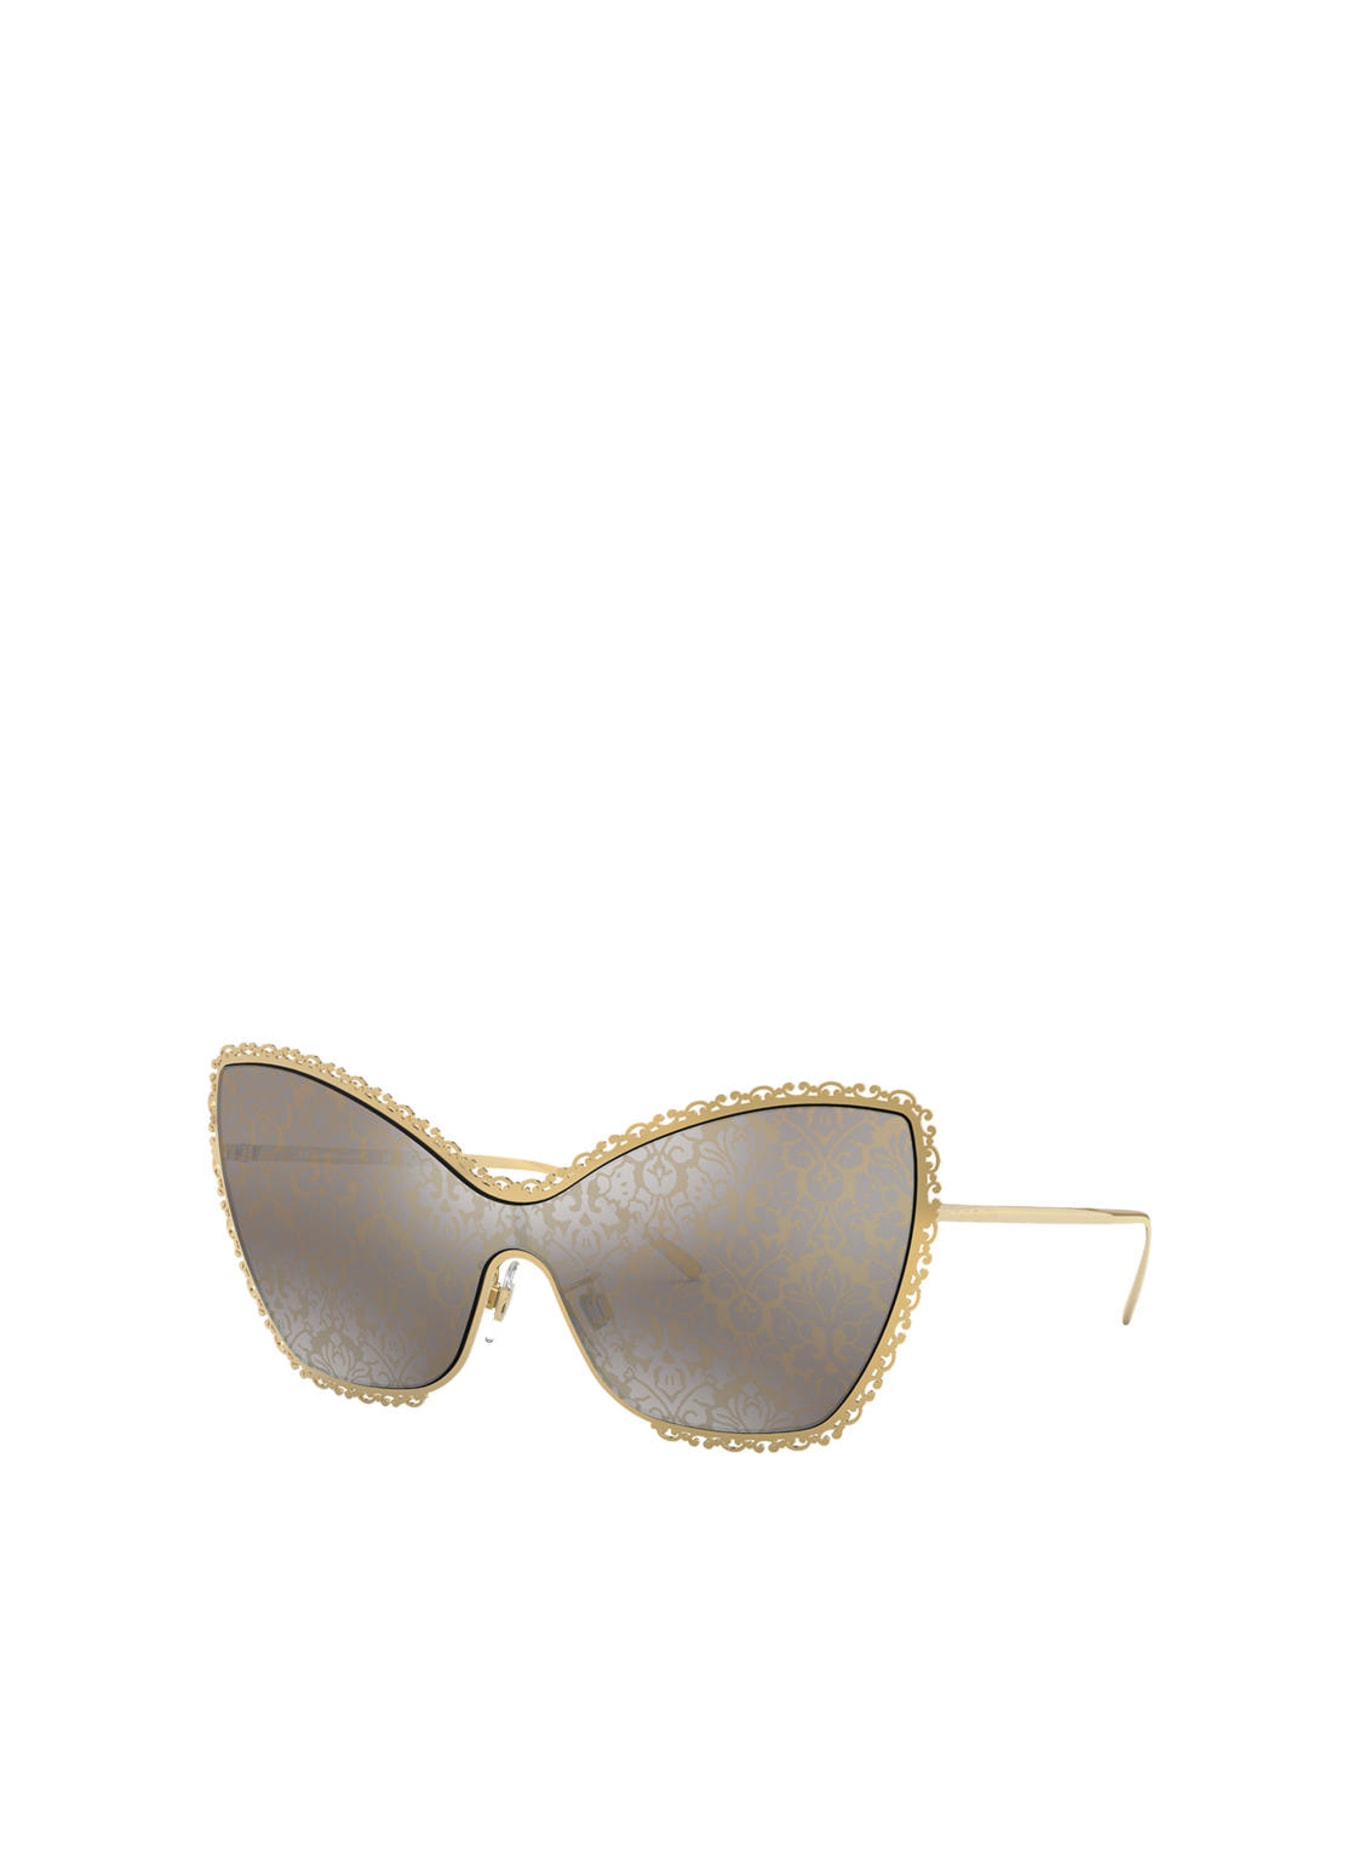 DOLCE & GABBANA Sunglasses DG 2240, Color: 02/O2 - GOLD/GRAY (Image 1)